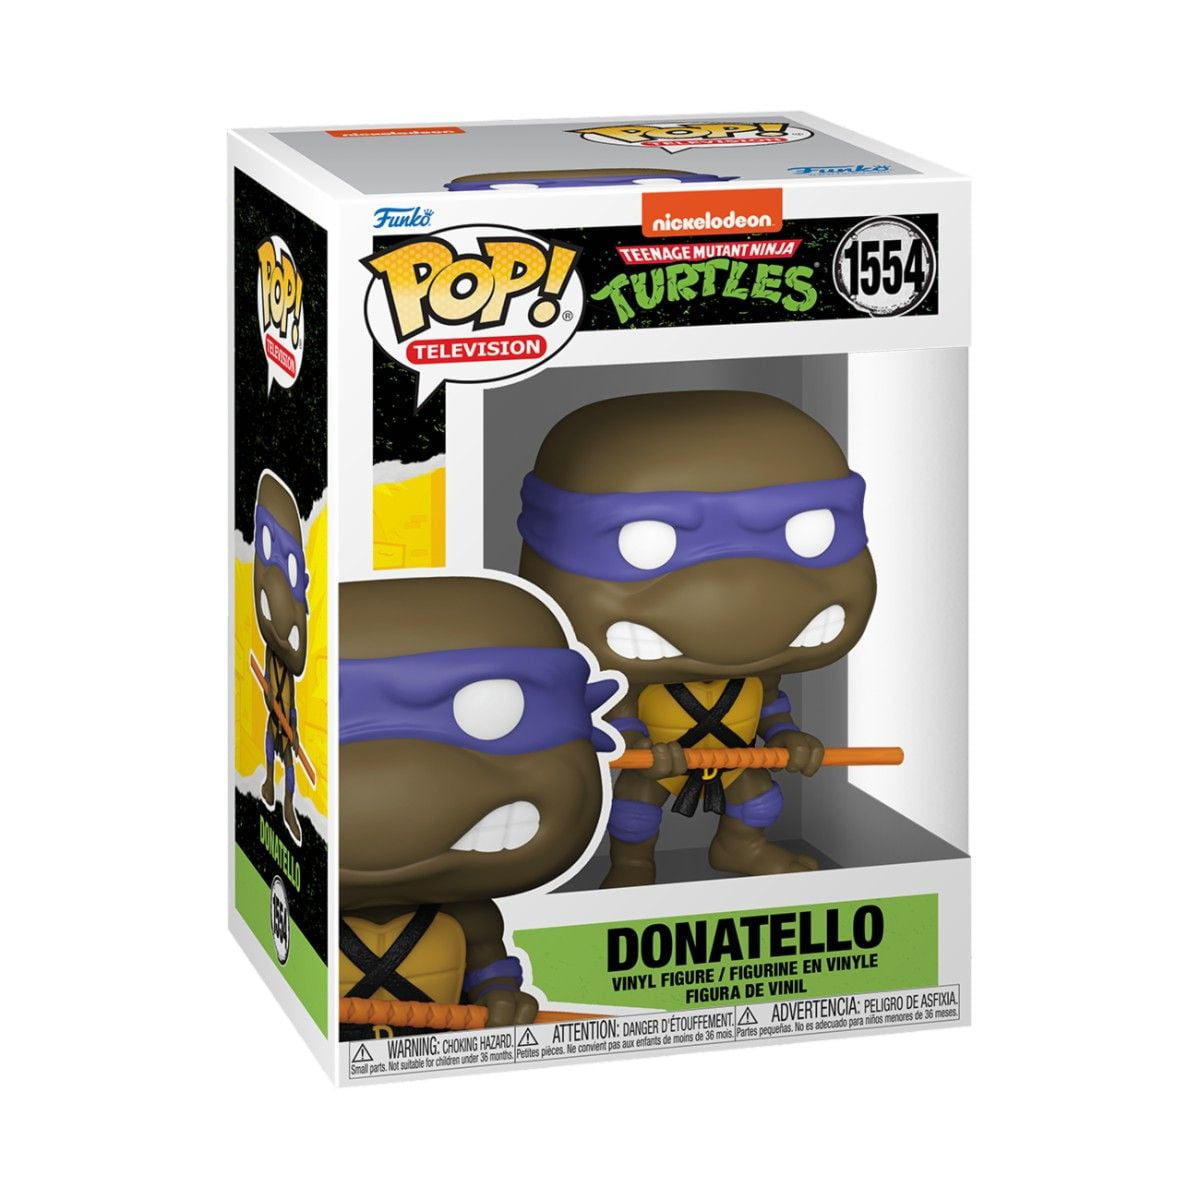 Donatello - Teenage Mutant Ninja Turtles S4 - Funko POP! TV (1554)